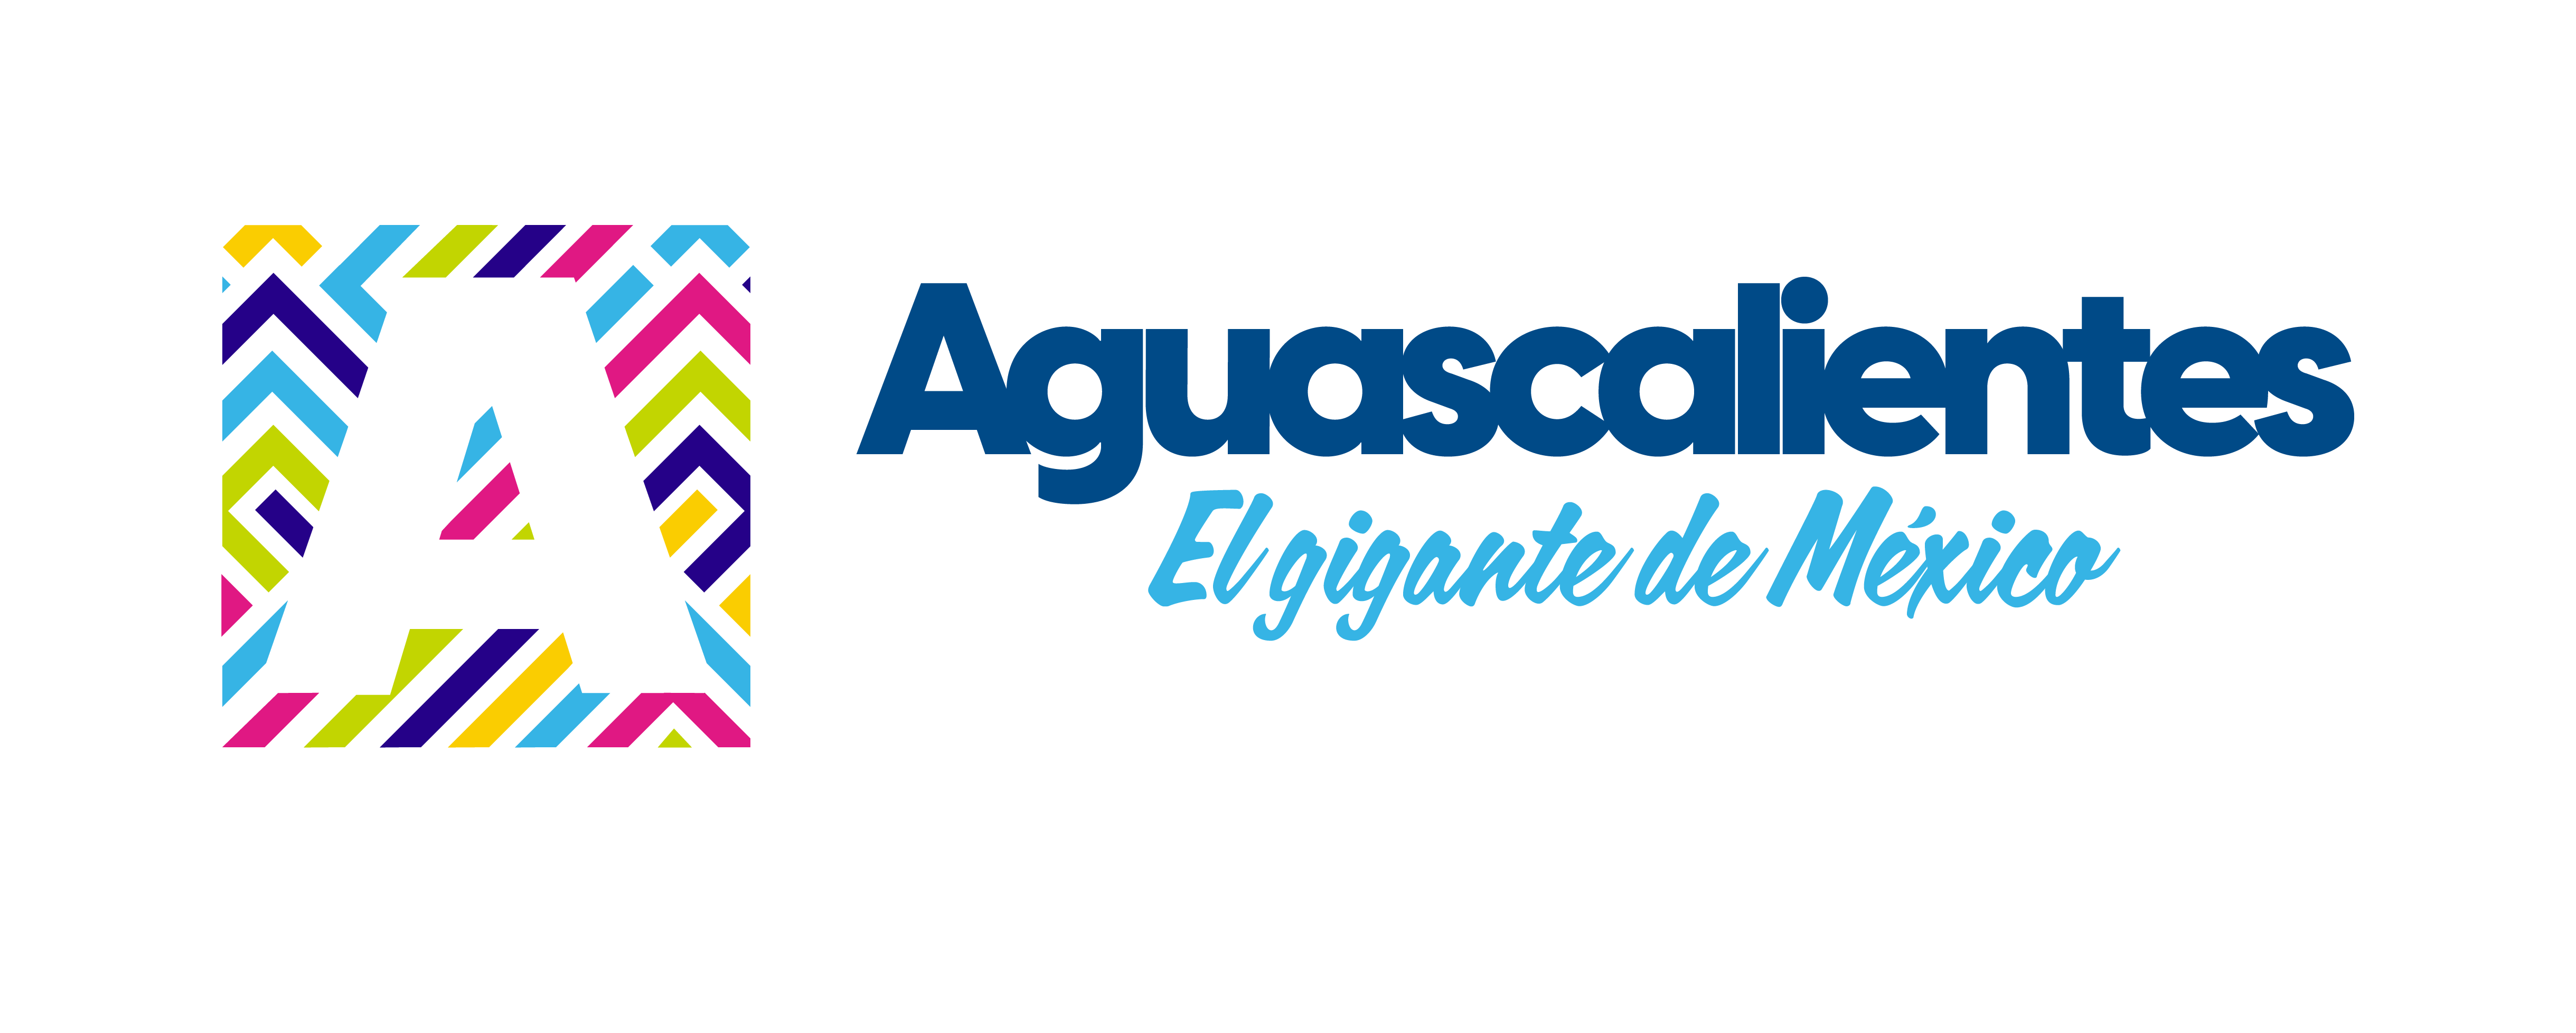 Logo Aguascalientes